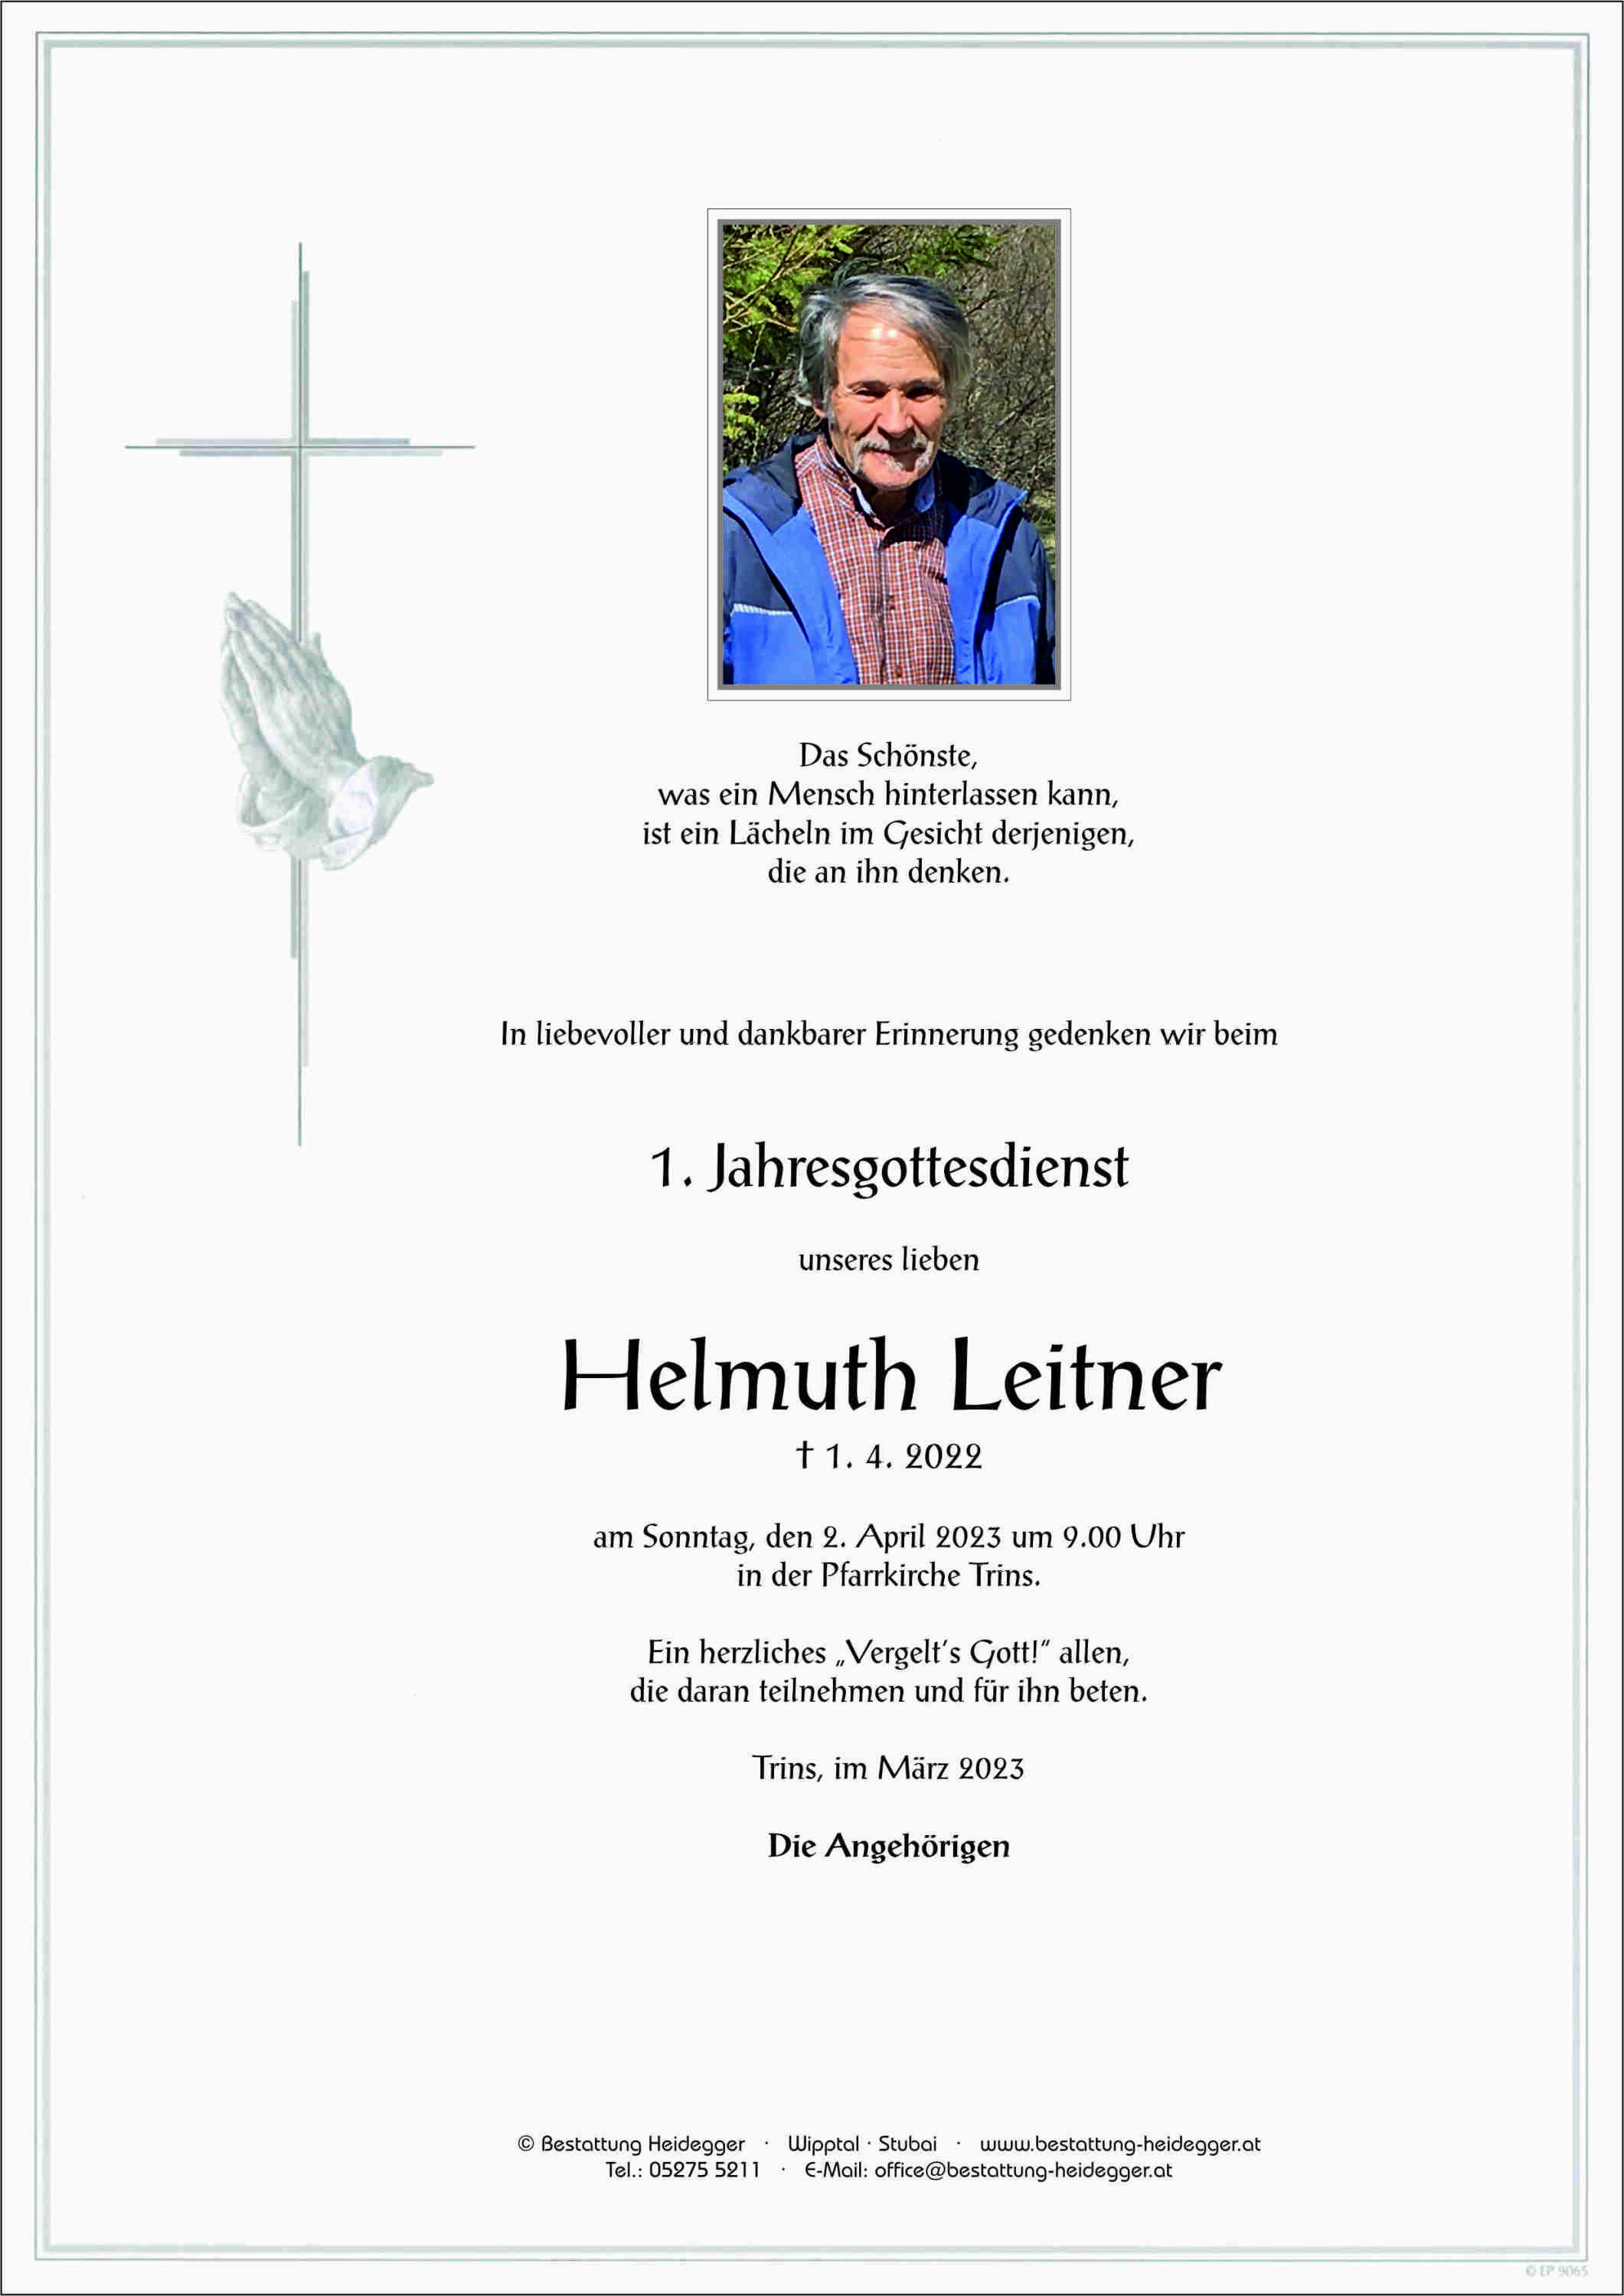 Helmuth Leitner